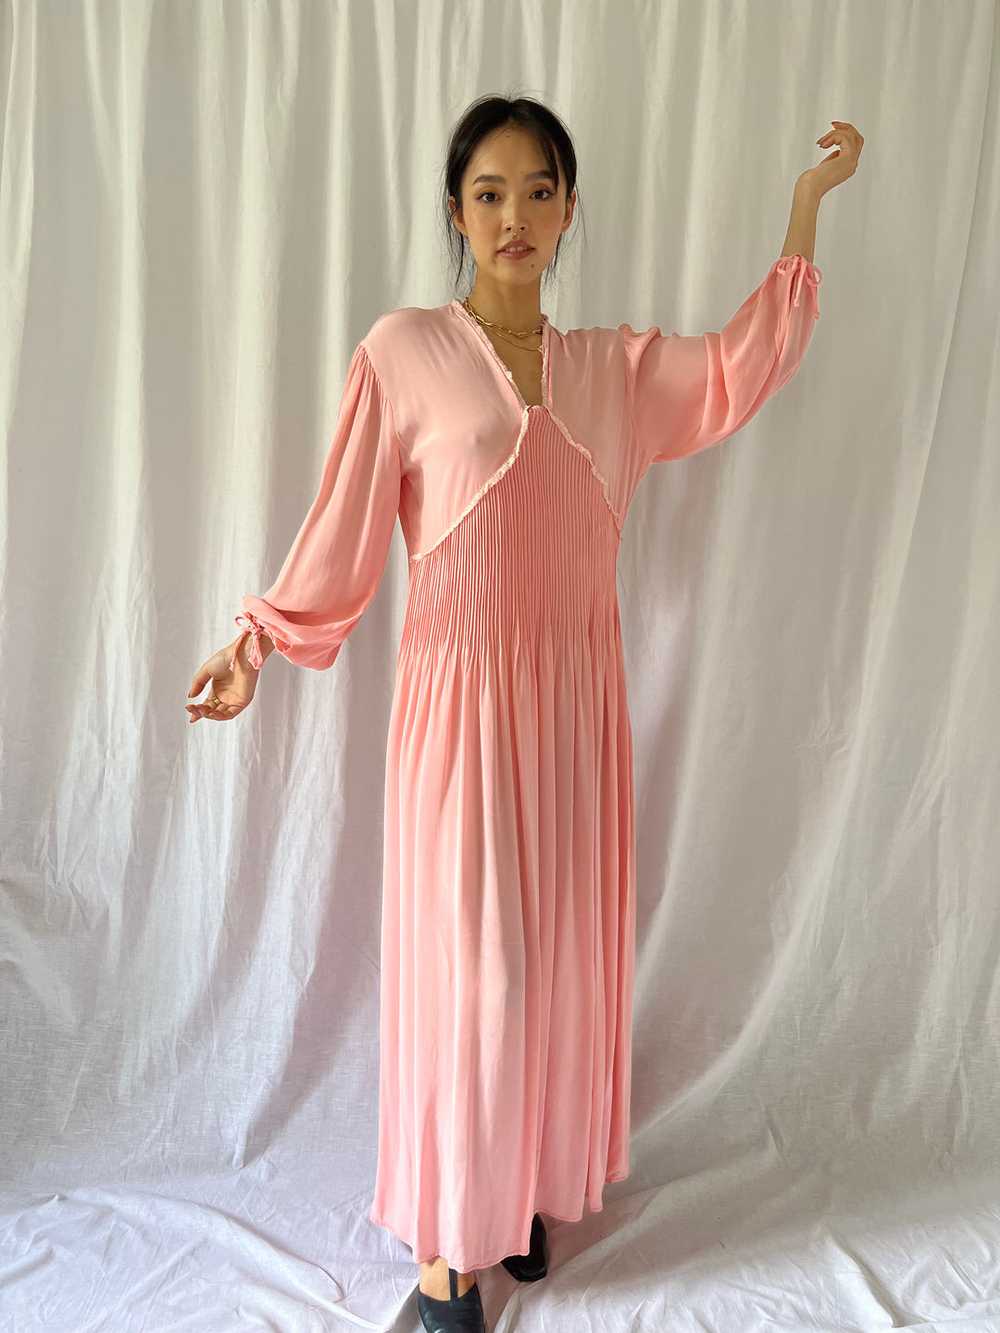 Vintage 30s pink dress long balloon sleeves - image 8